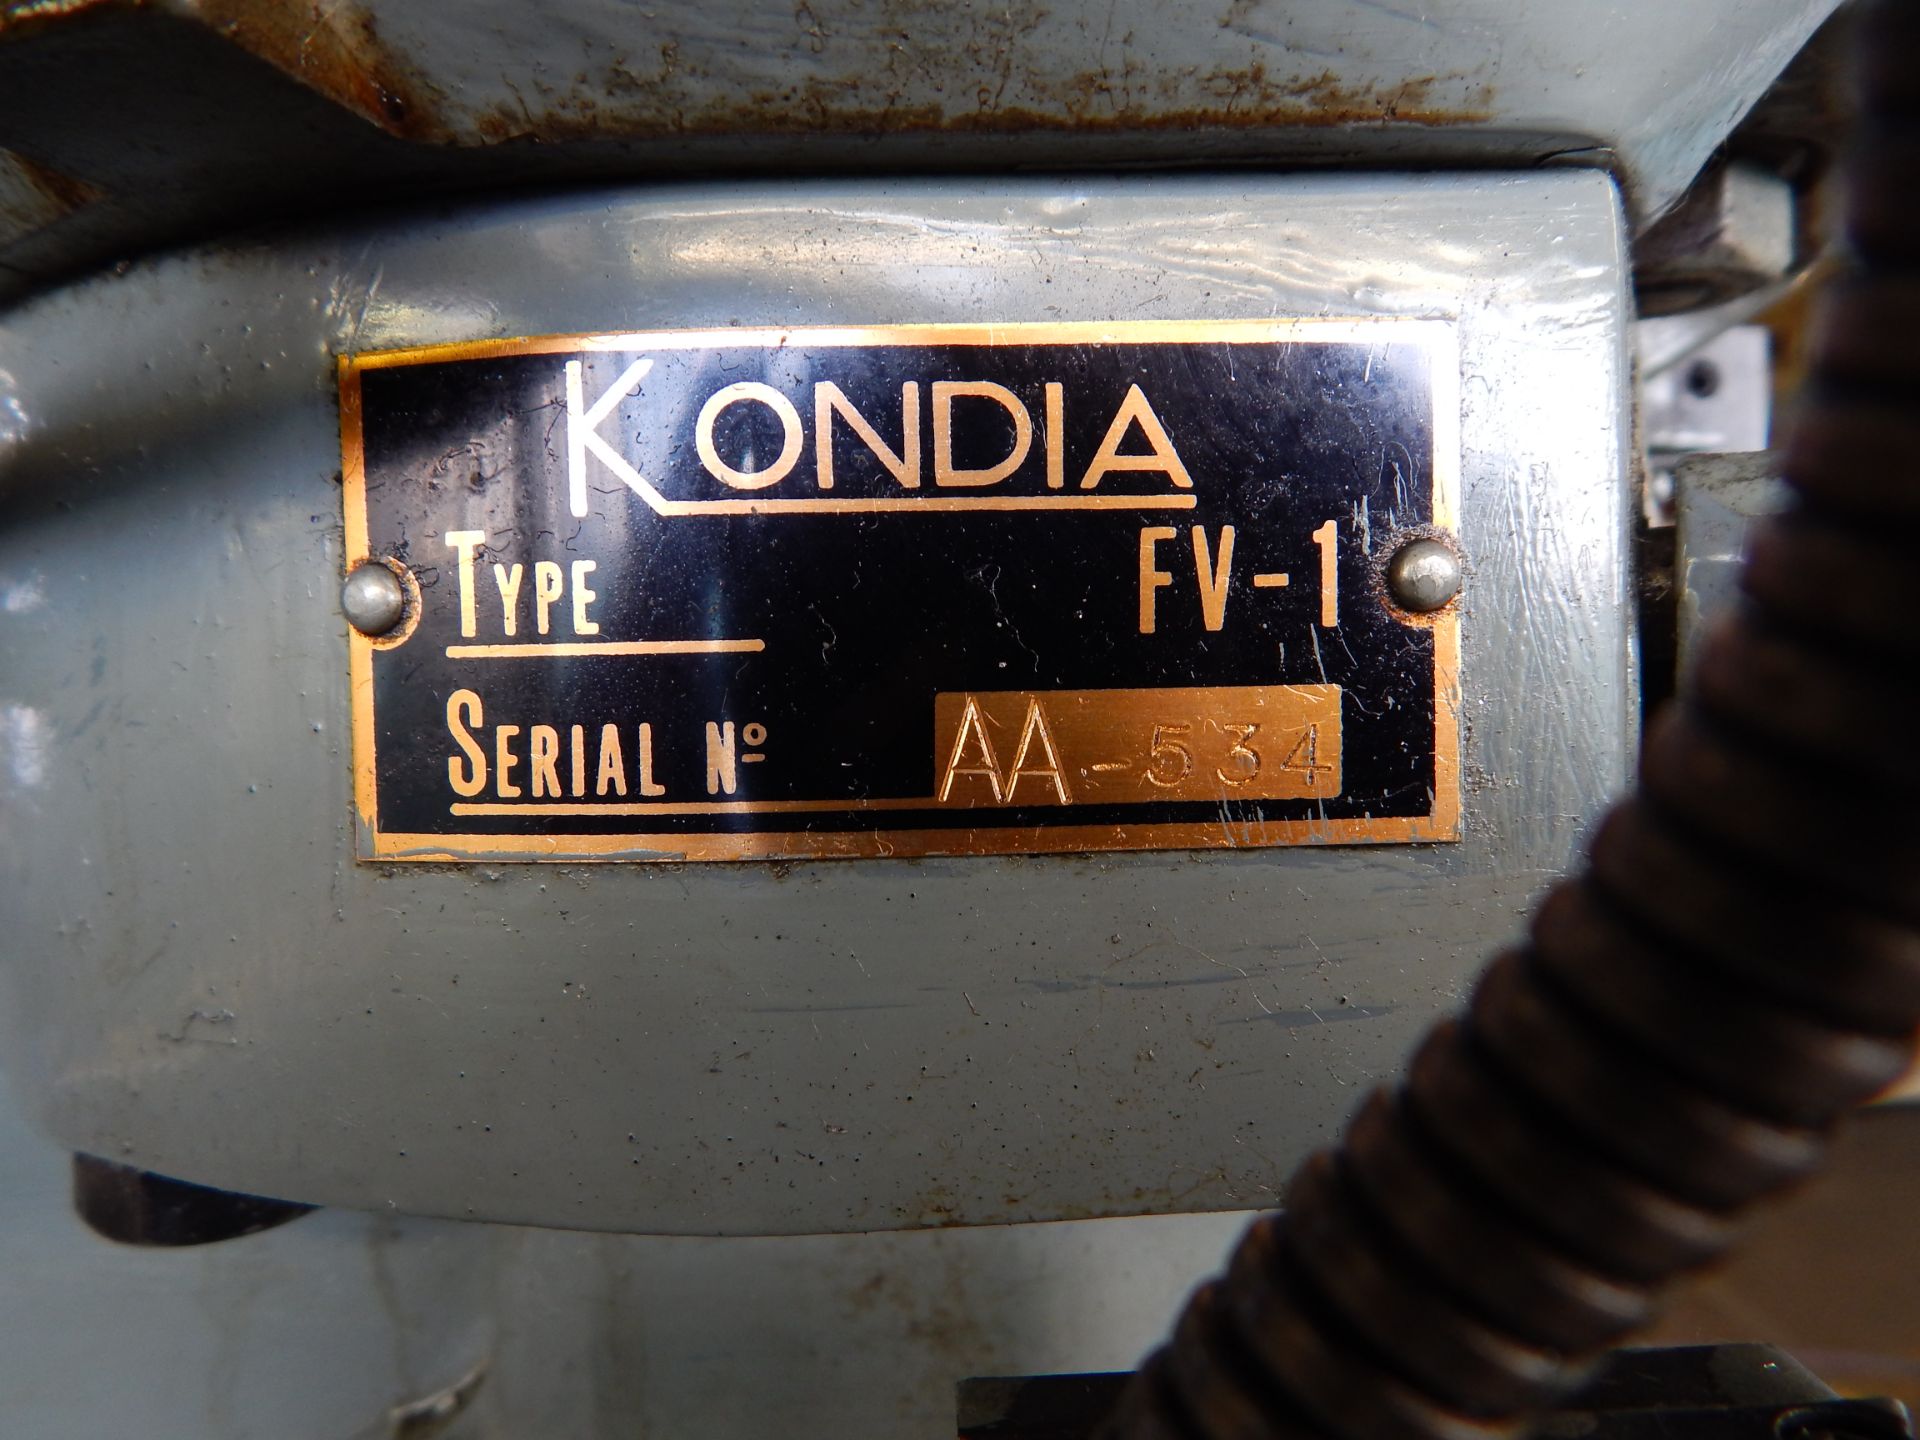 Clausing Kondia/Prototrak CNC Knee Mill, Model FV-1, S/N AA-534, Prototrak M2 CNC Control, Power - Image 12 of 17